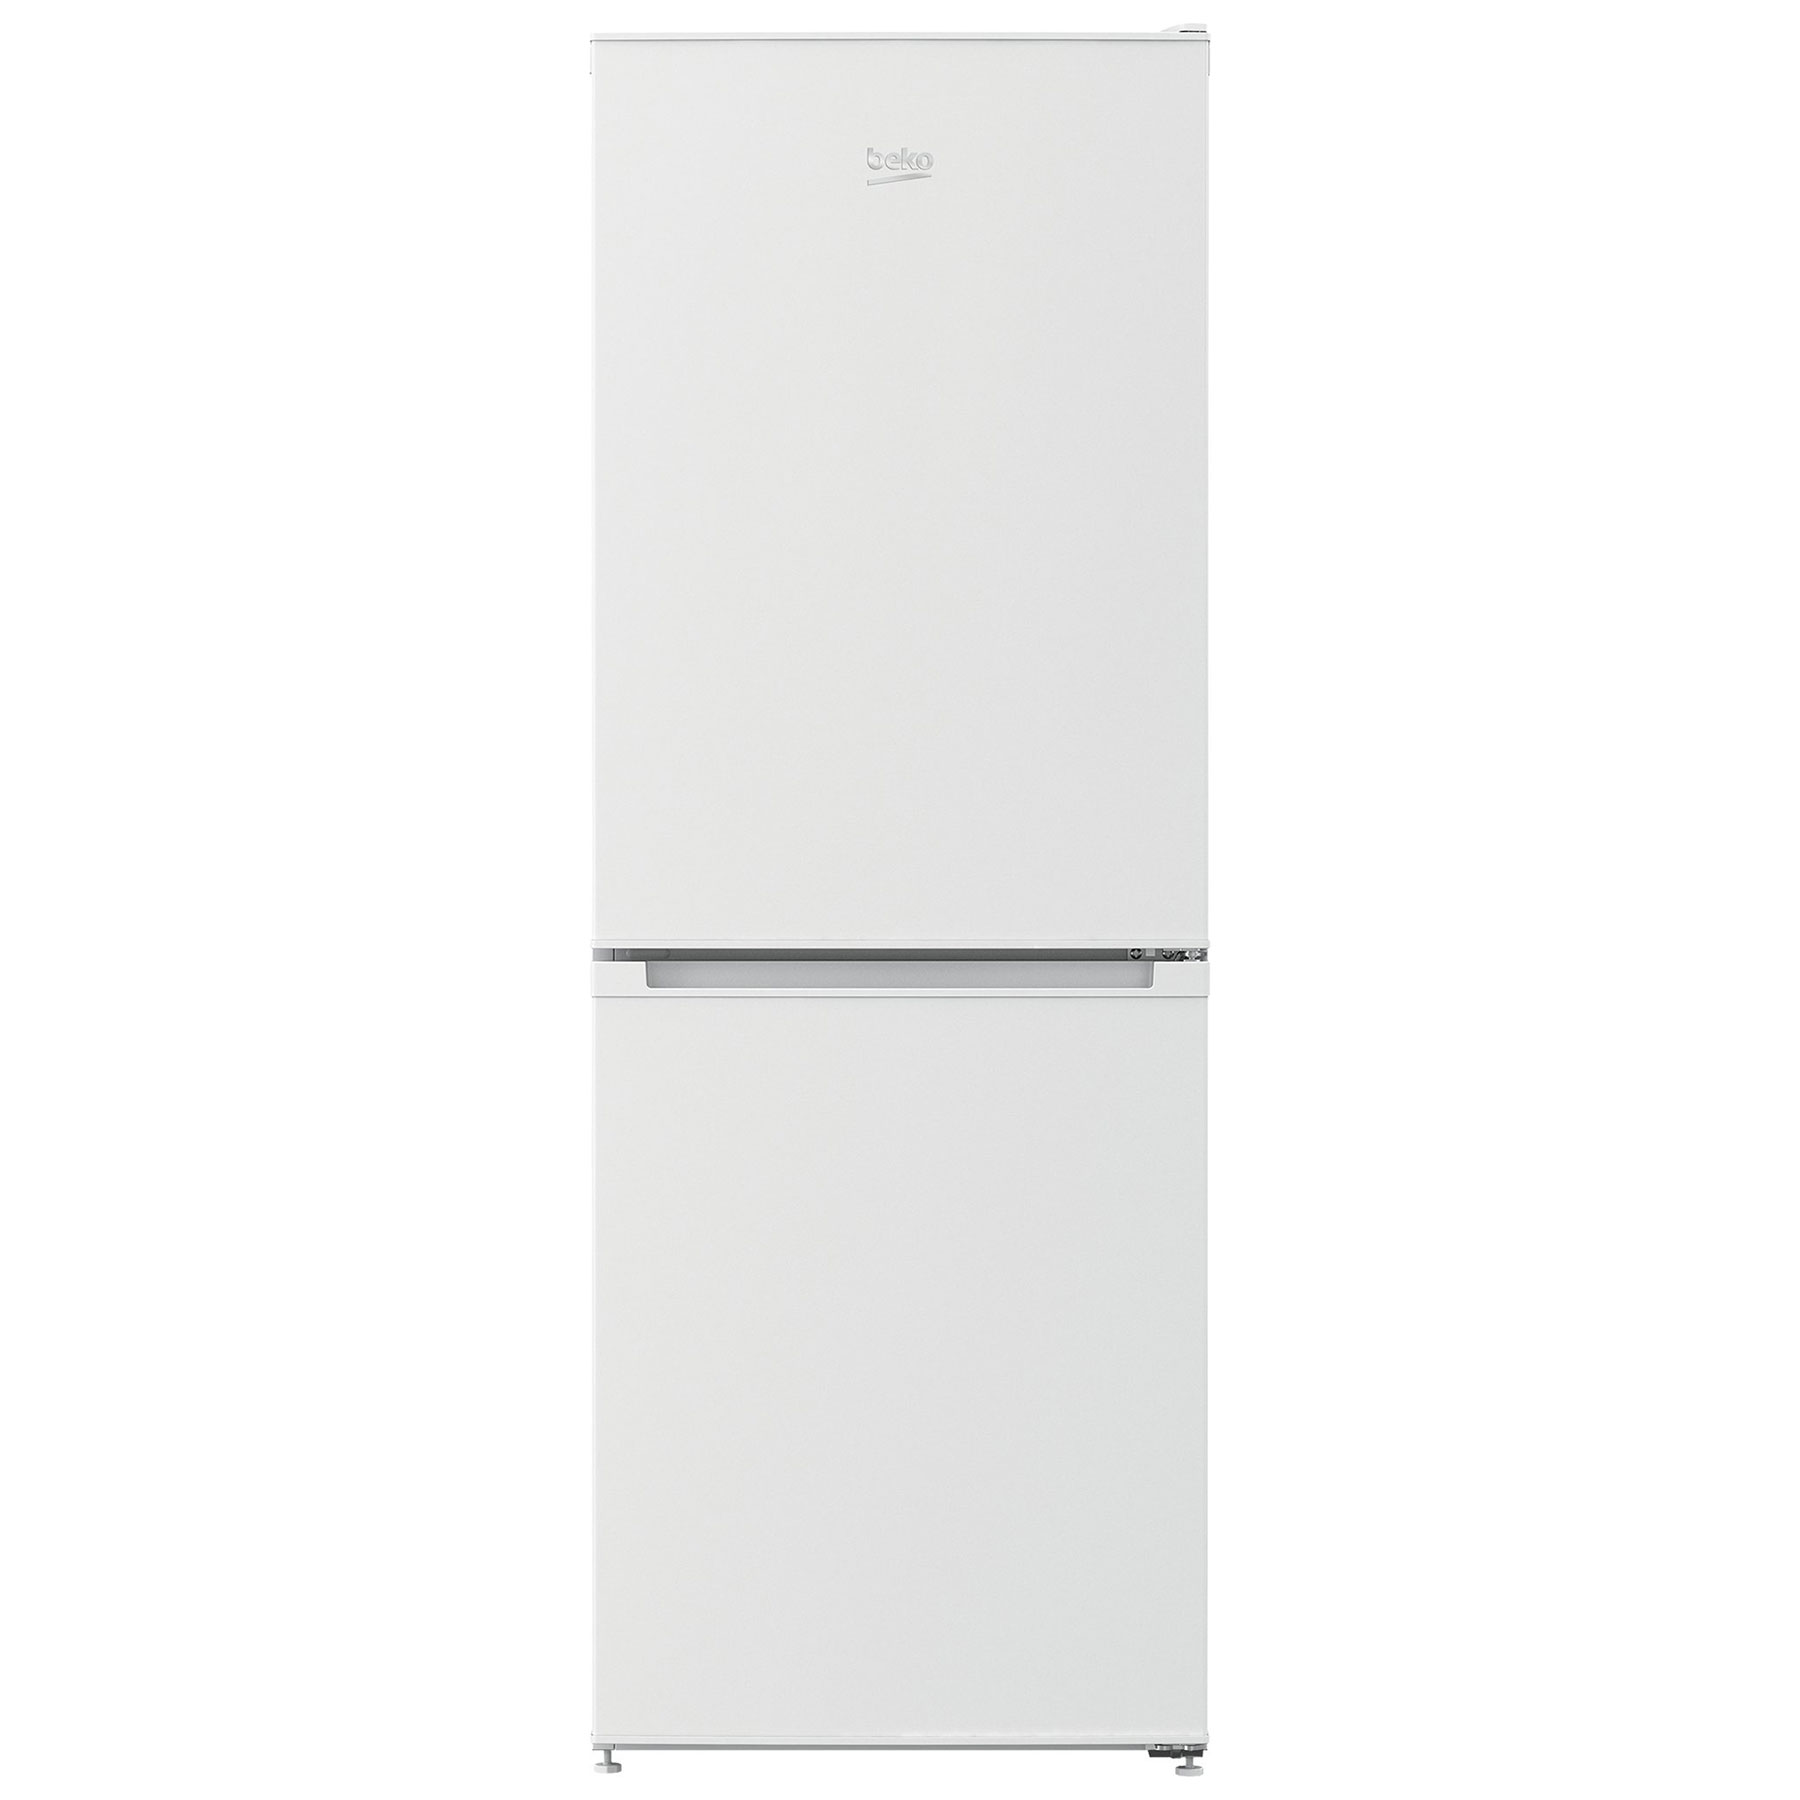 Image of Beko CCFM4552W 54cm Frost Free Fridge Freezer in White 1 53m E Rated